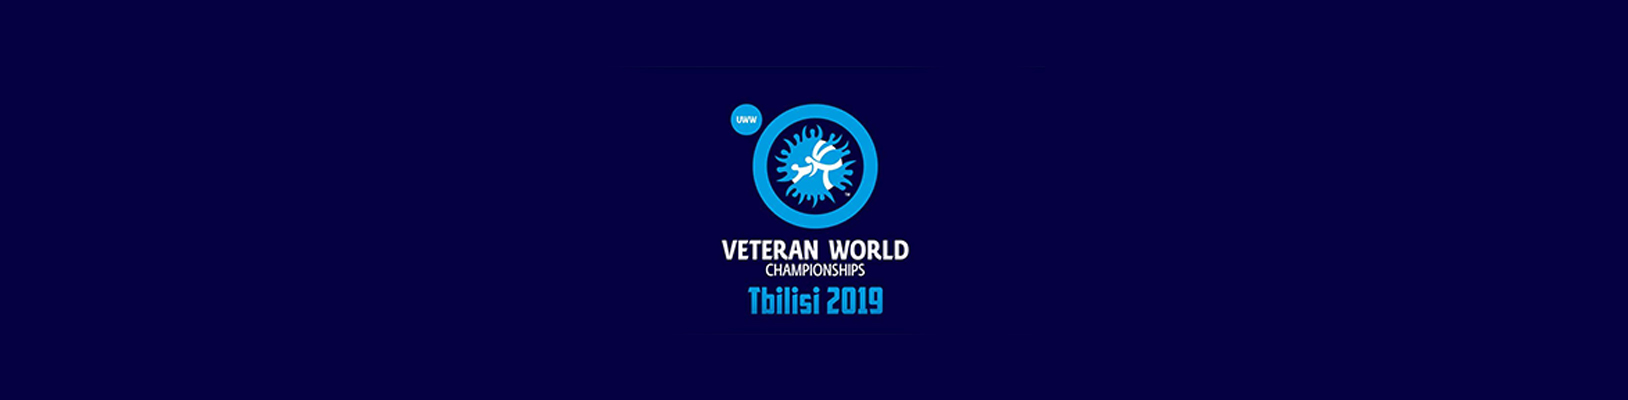 World Veterans Championships